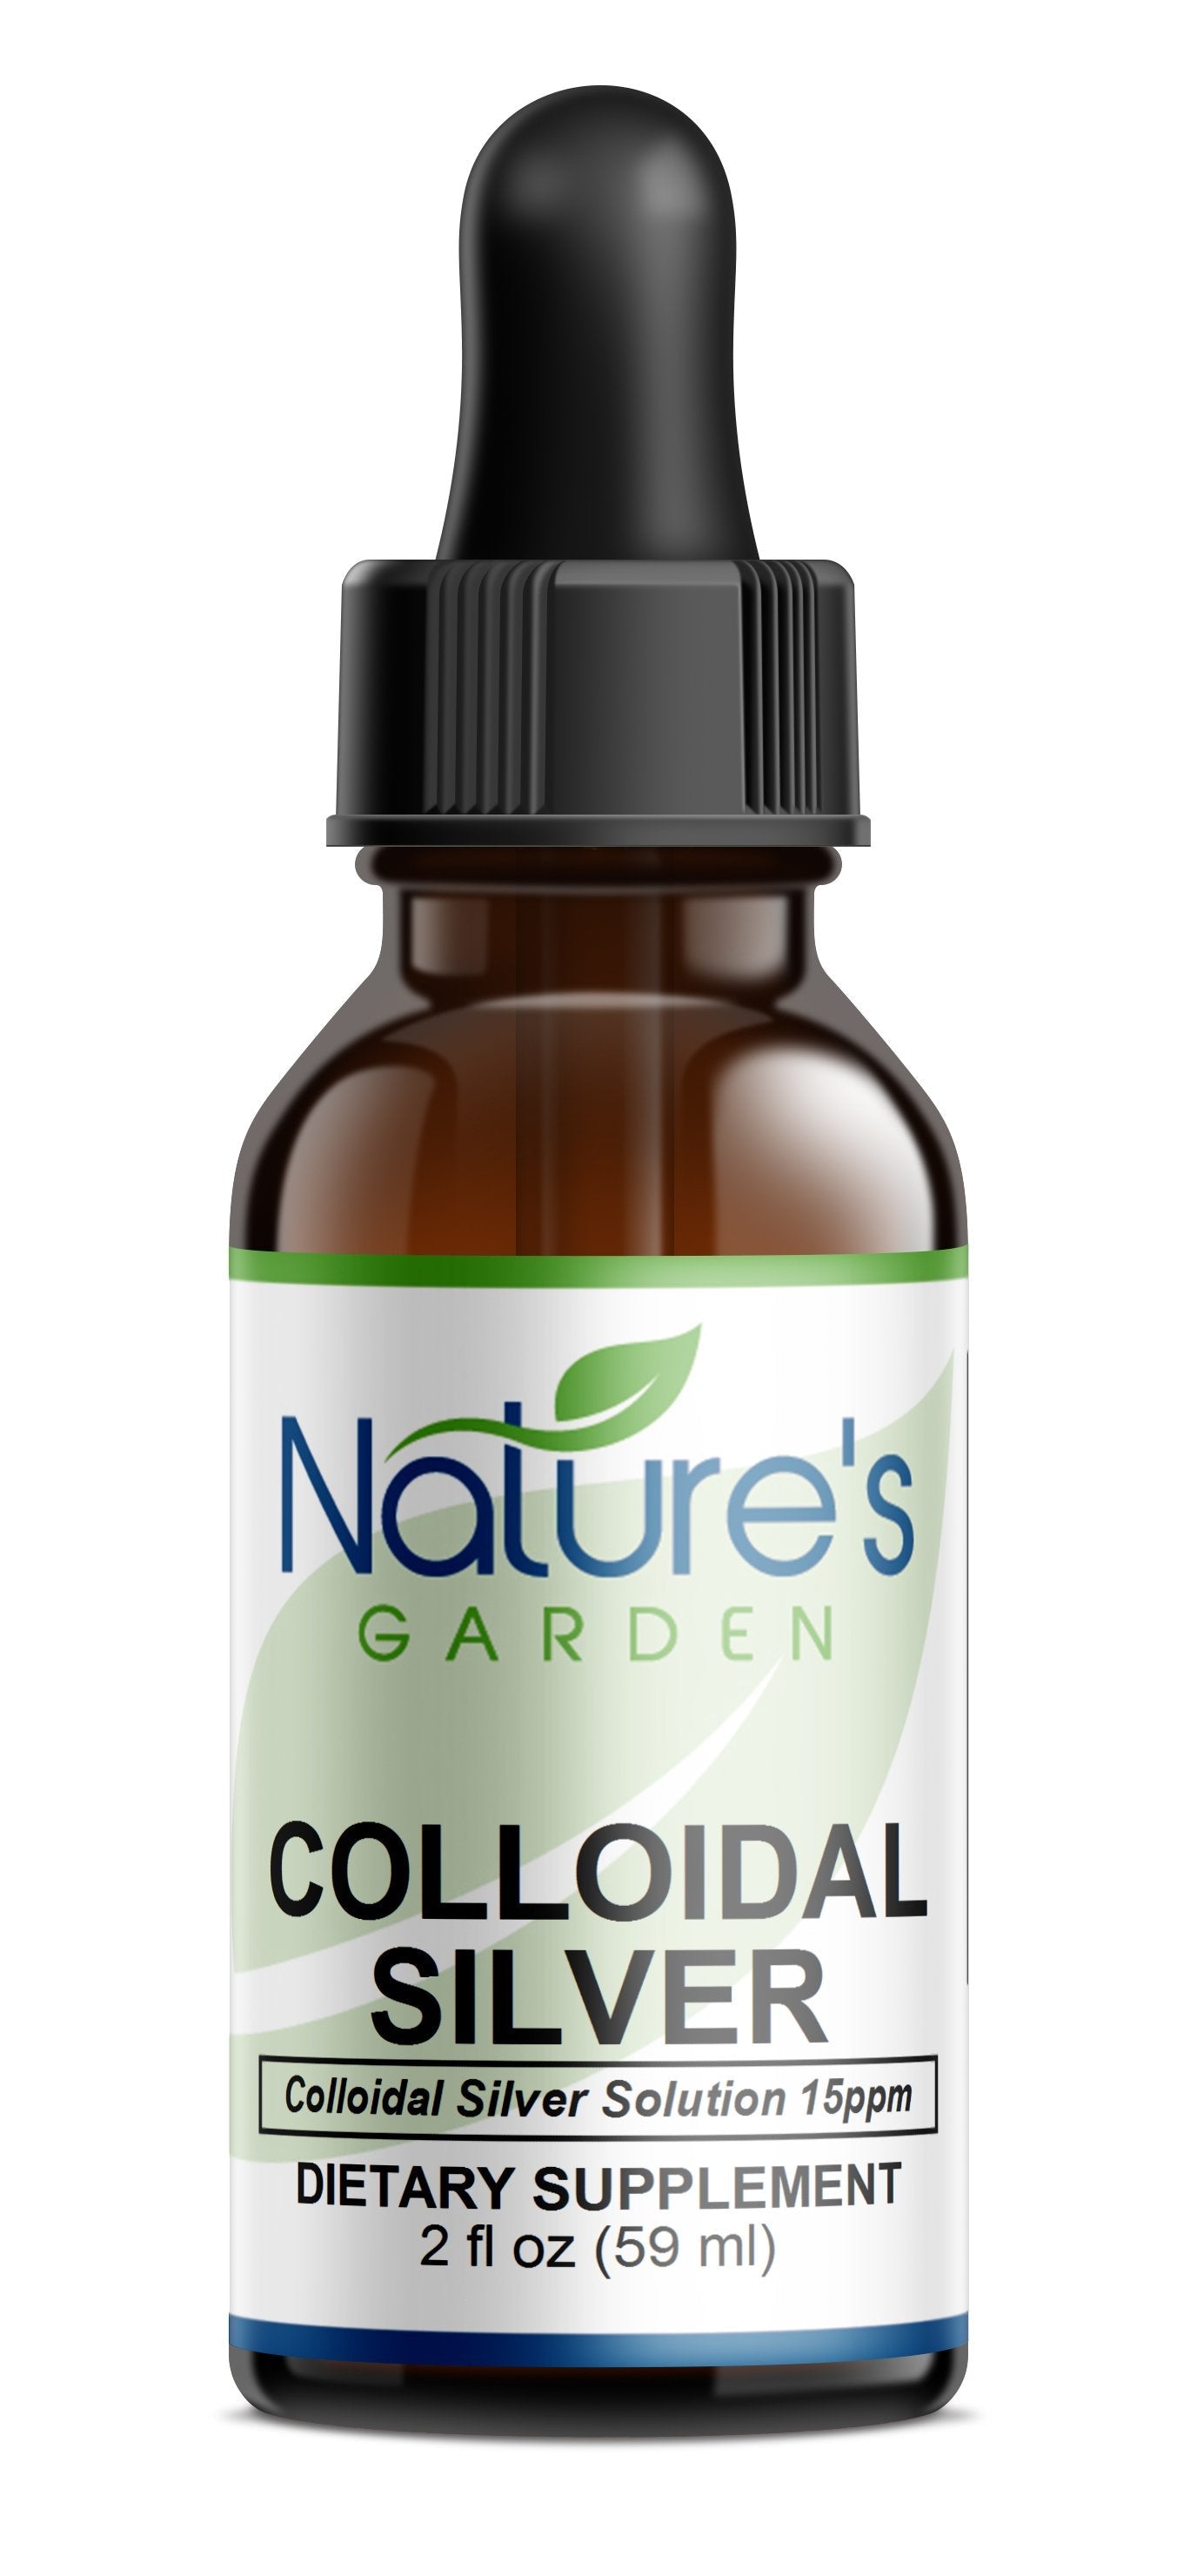 Colloidal Silver 15ppm (oral drops) - 2 oz